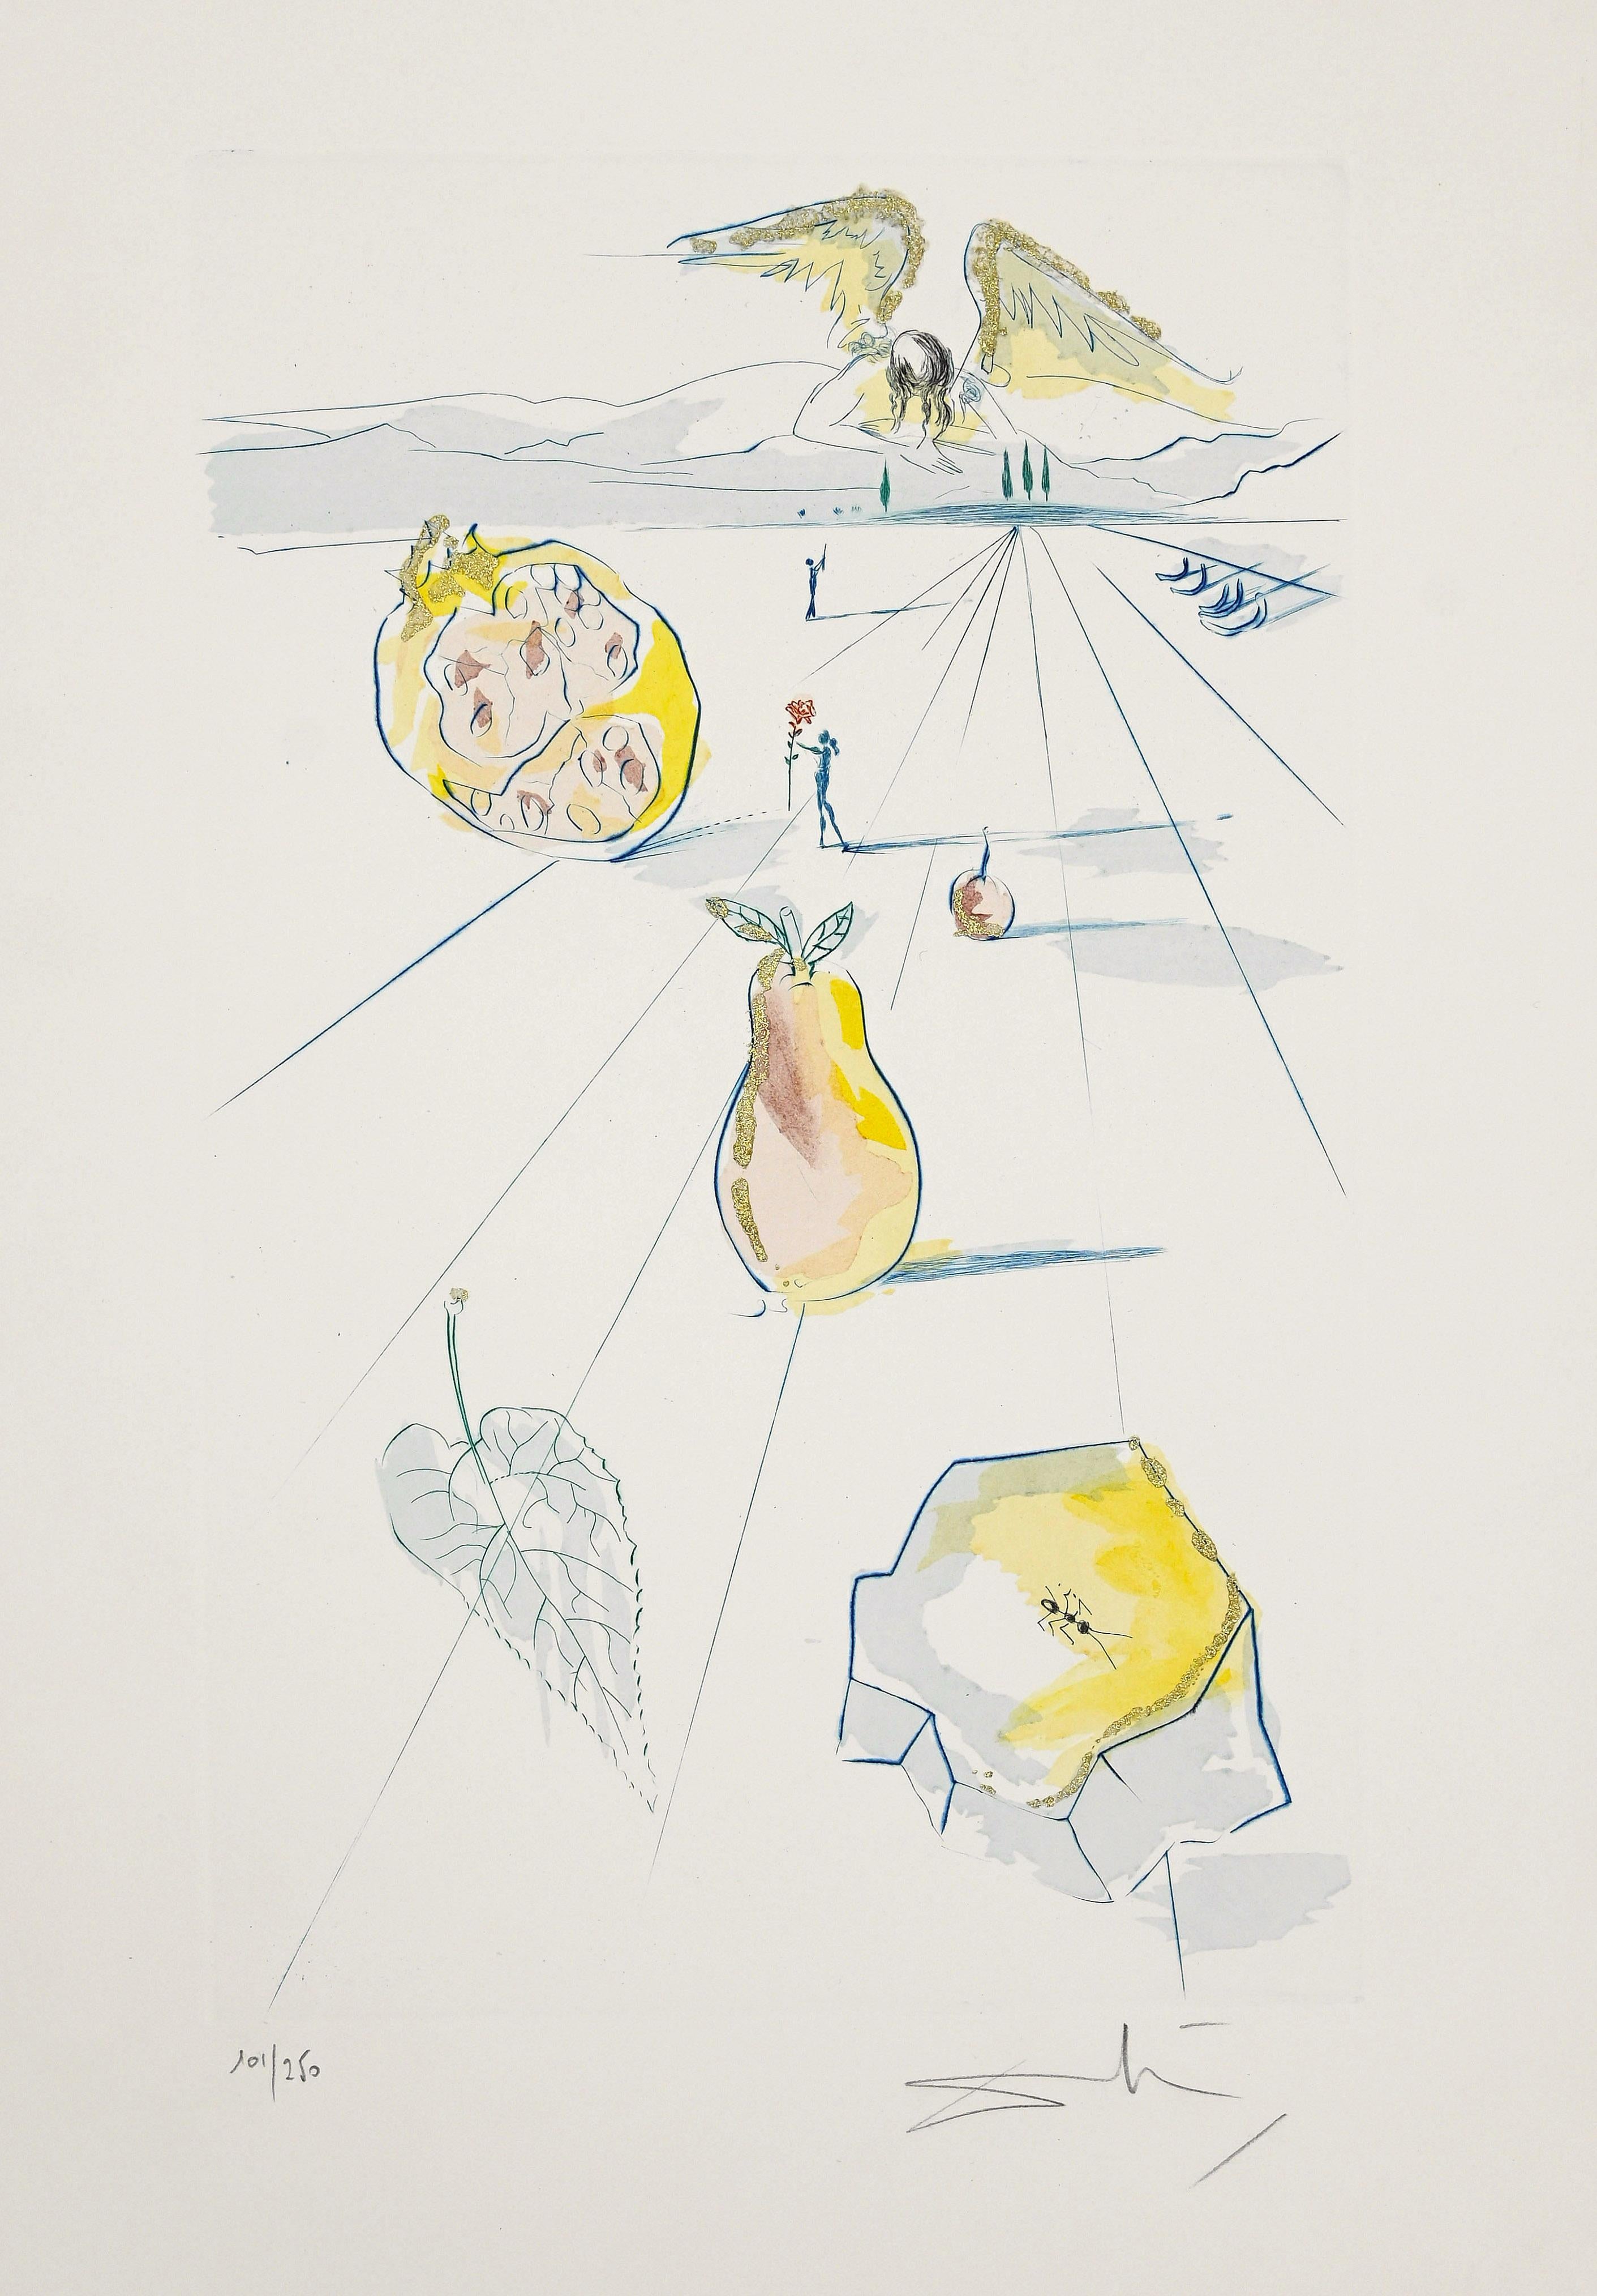 Salvador Dalí Print - The Fruits of the Valley - Original Etching by Salvador Dalì - 1971